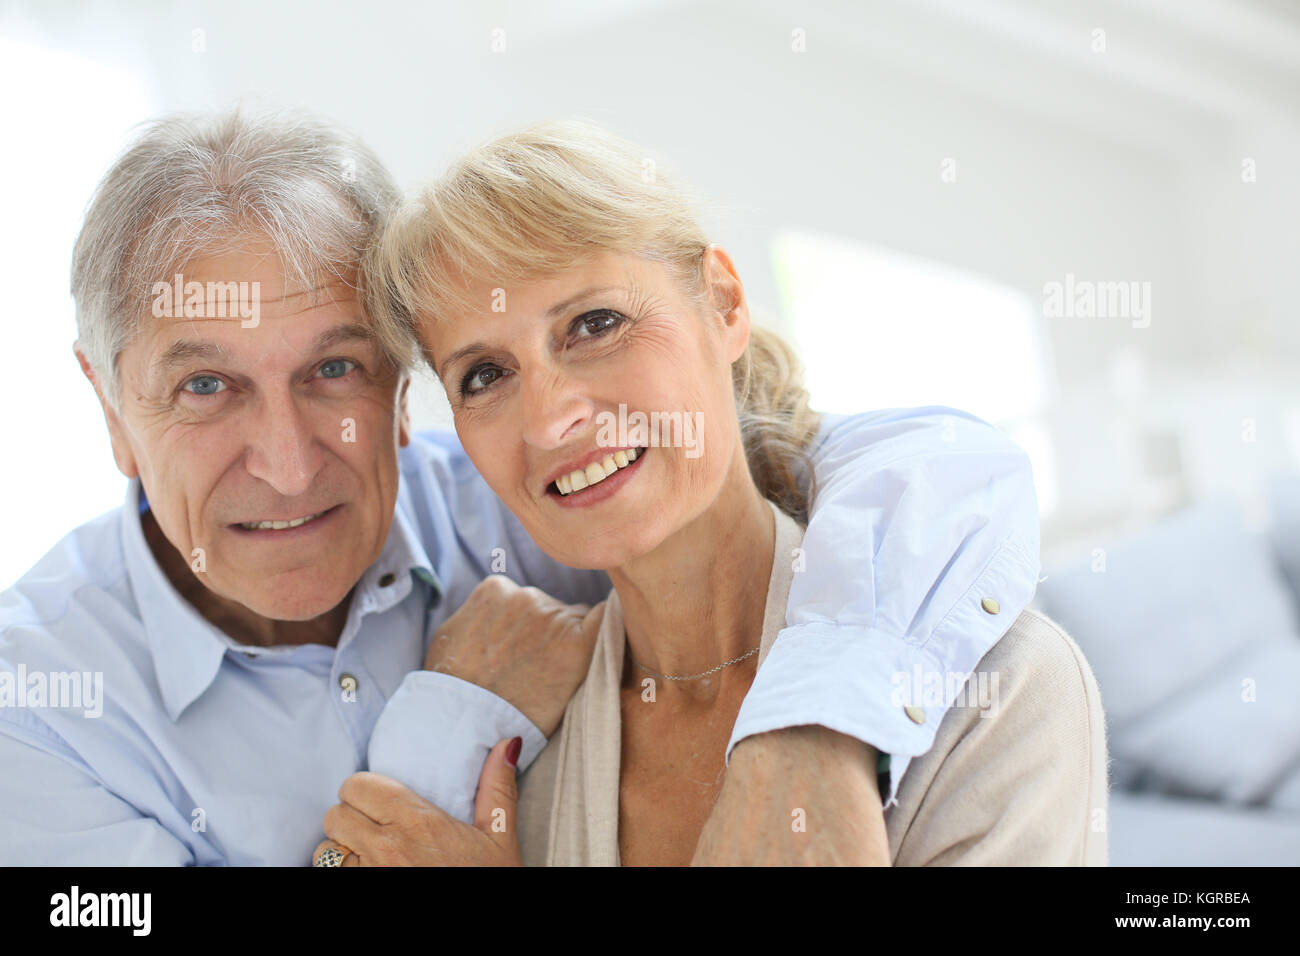 happy senior man embracing his wife Stock Photo